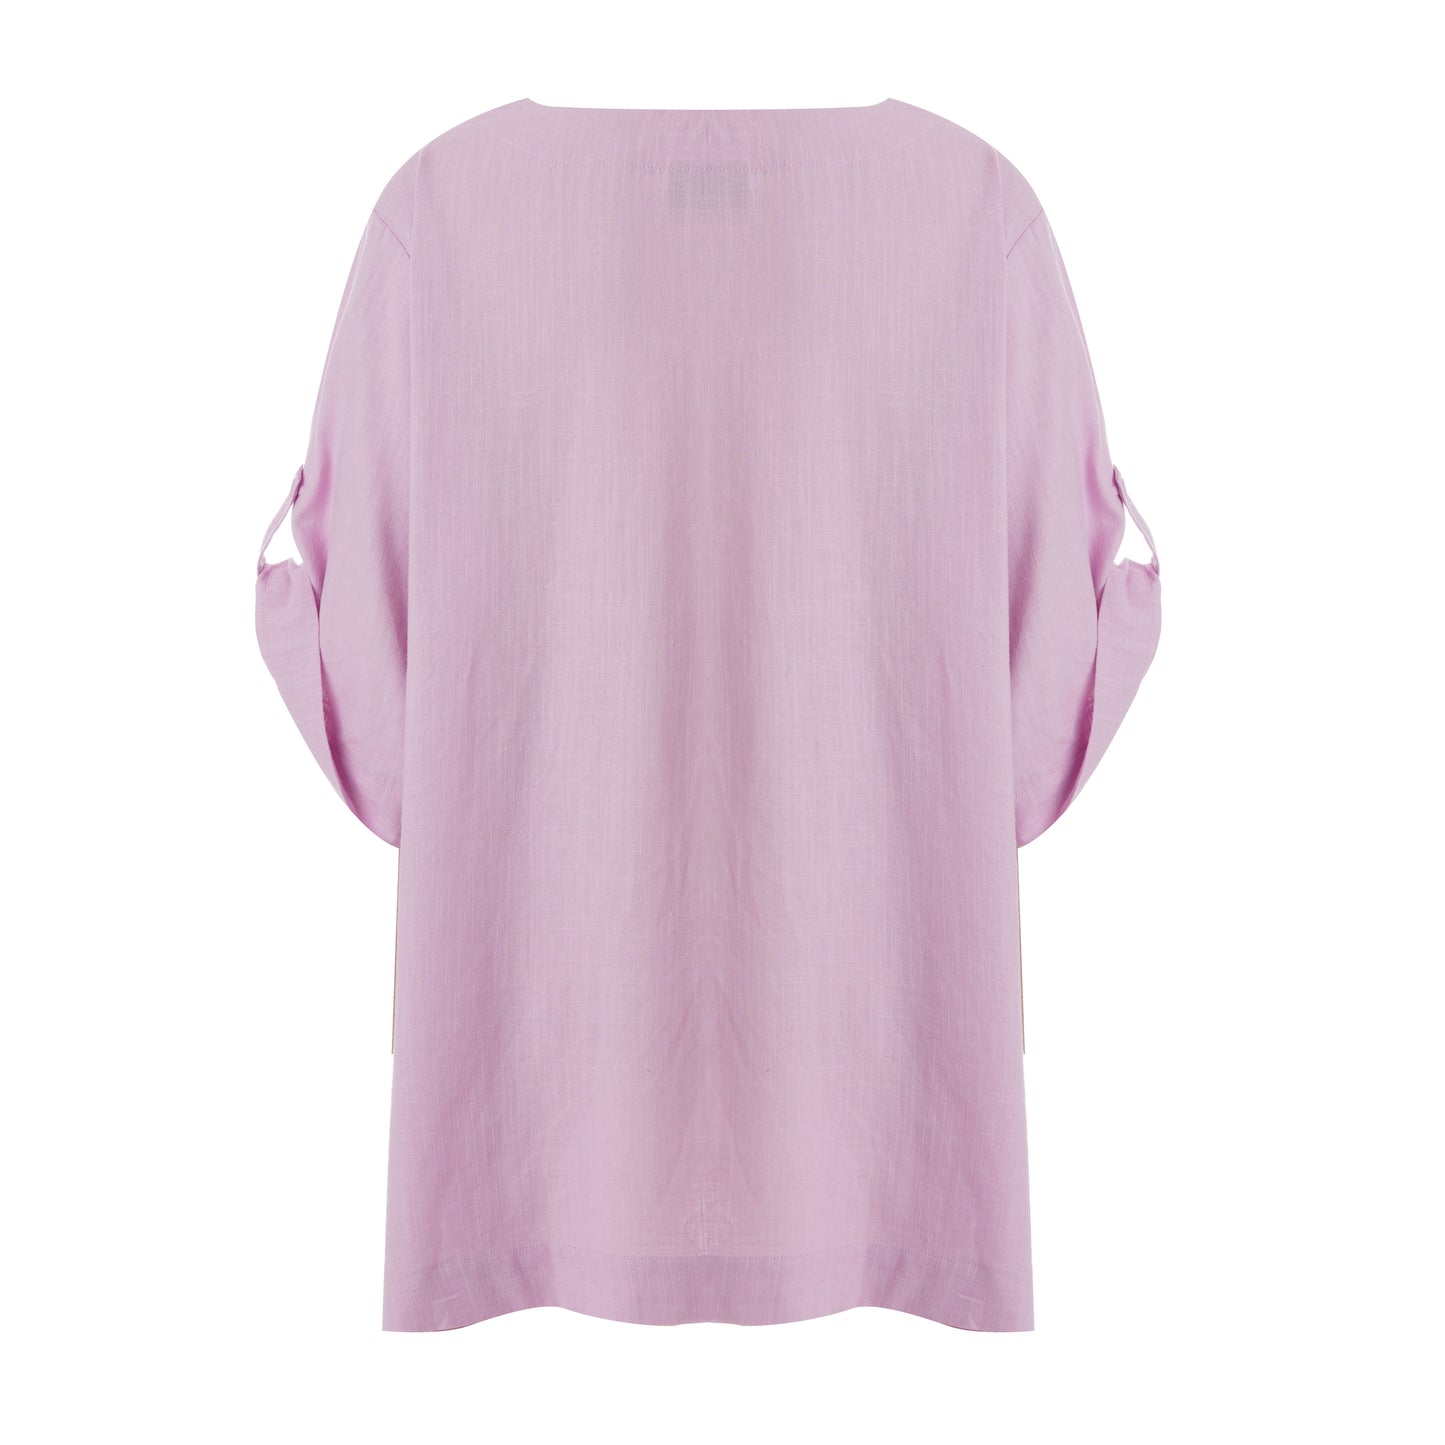 Gozzip Woman Loni Blouse - FLERE FARVER Blouse Pink Lavendel